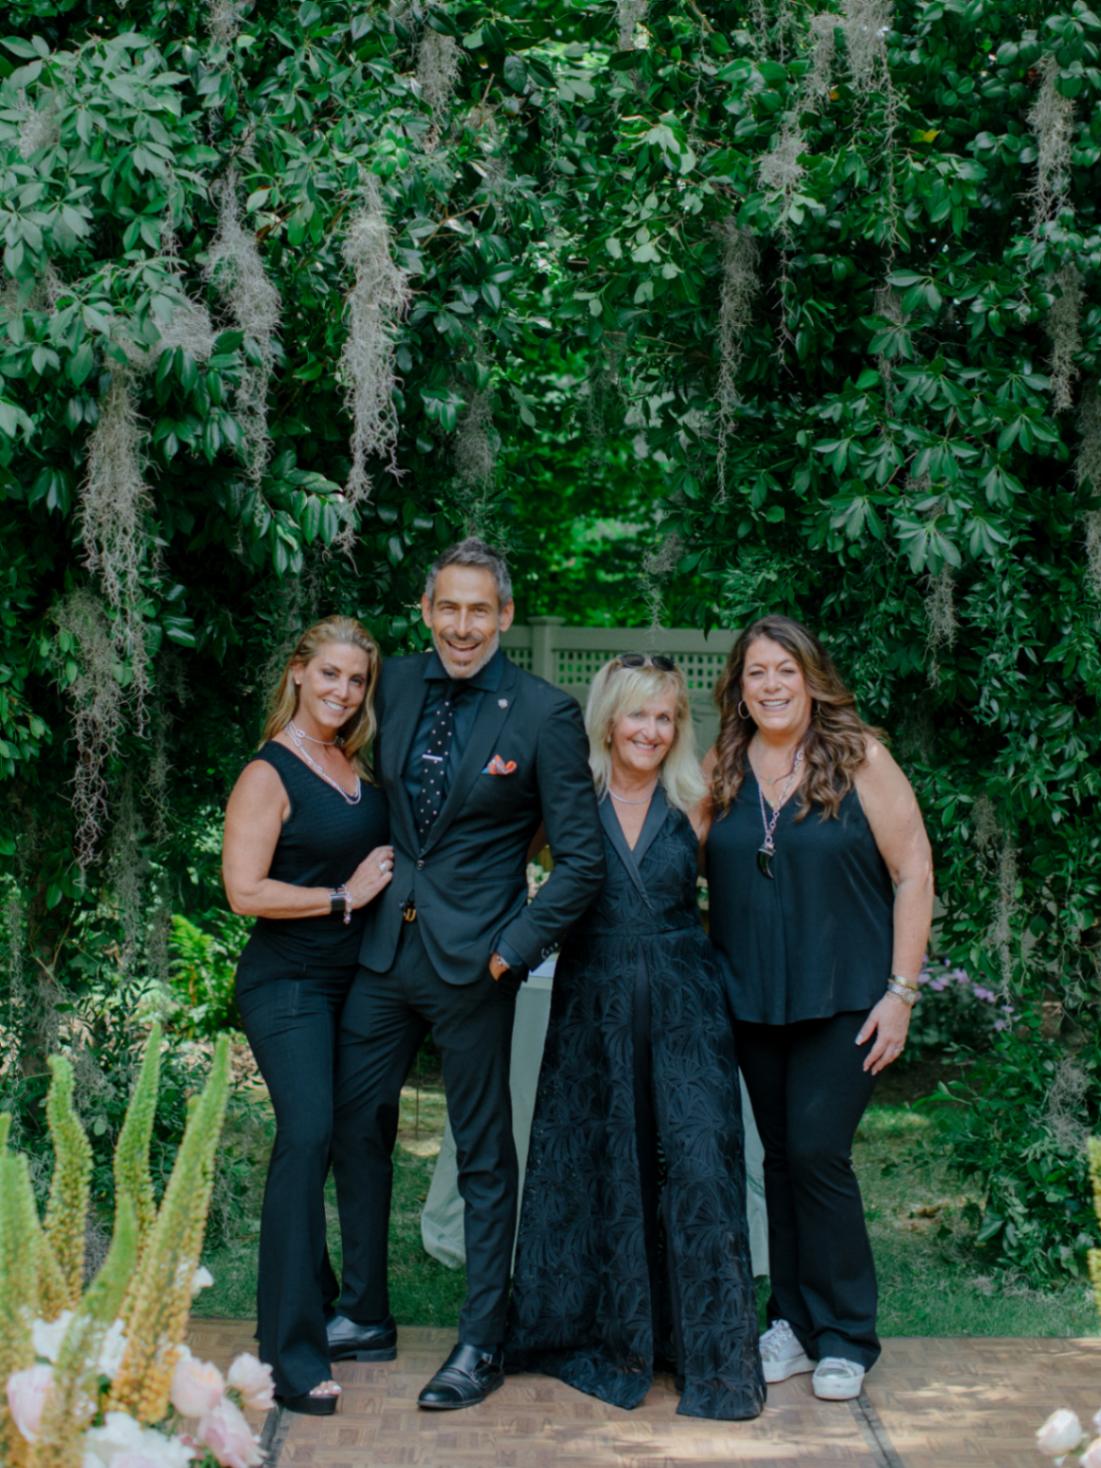 Wedding dream team Jen Gould, Chris J. Evans, JoAnn Gregoli, Robin Selden - One man, three women - all wearing black